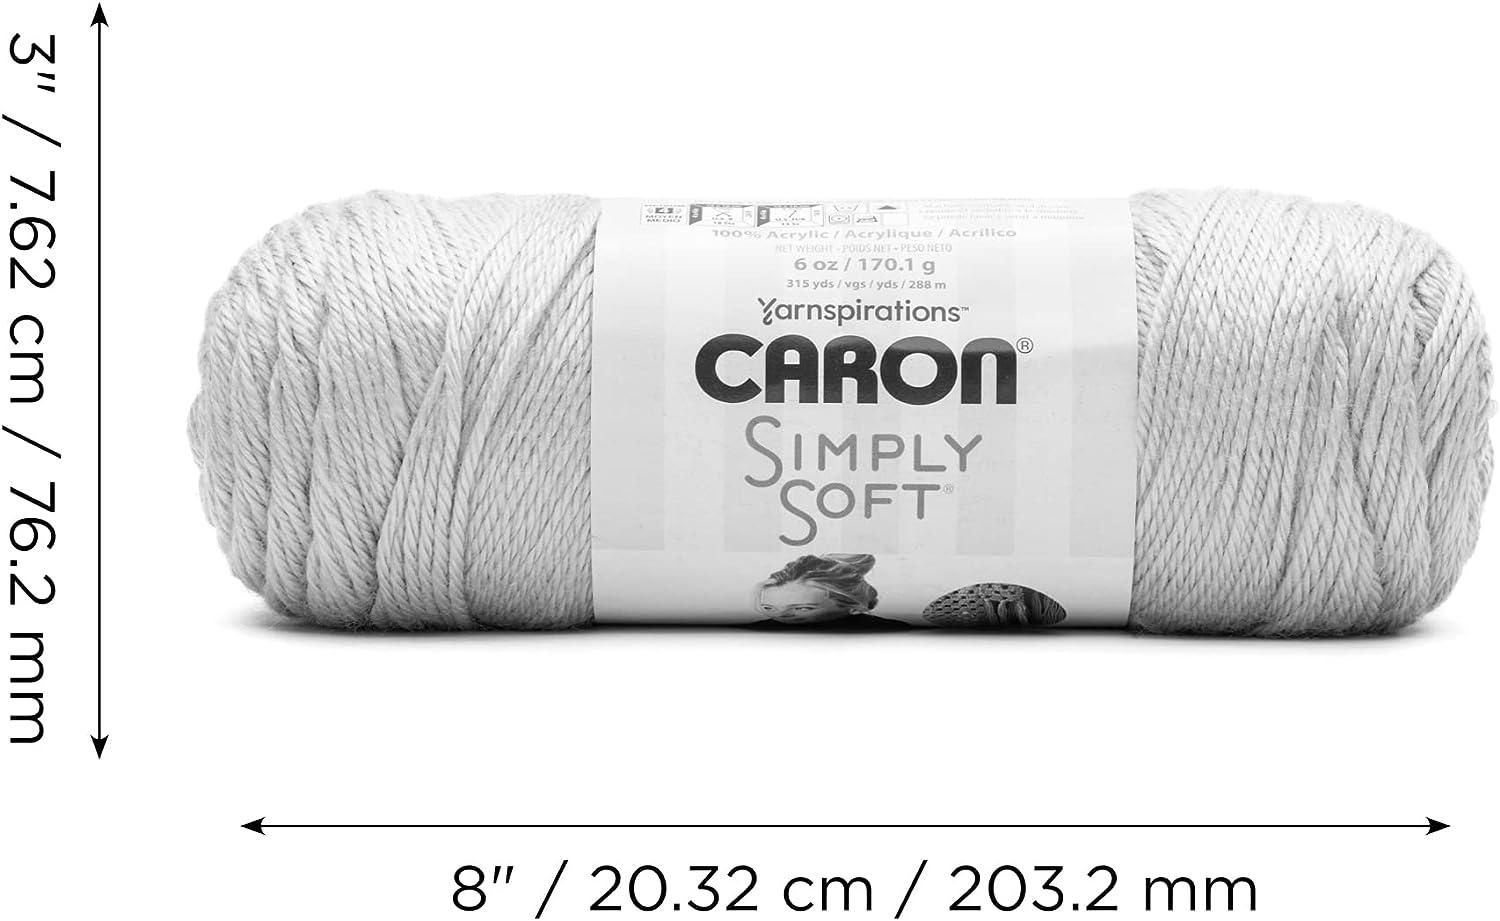 Caron Simply Soft Acrylic White Yarn 5.5 oz, size 4 yarn, approx